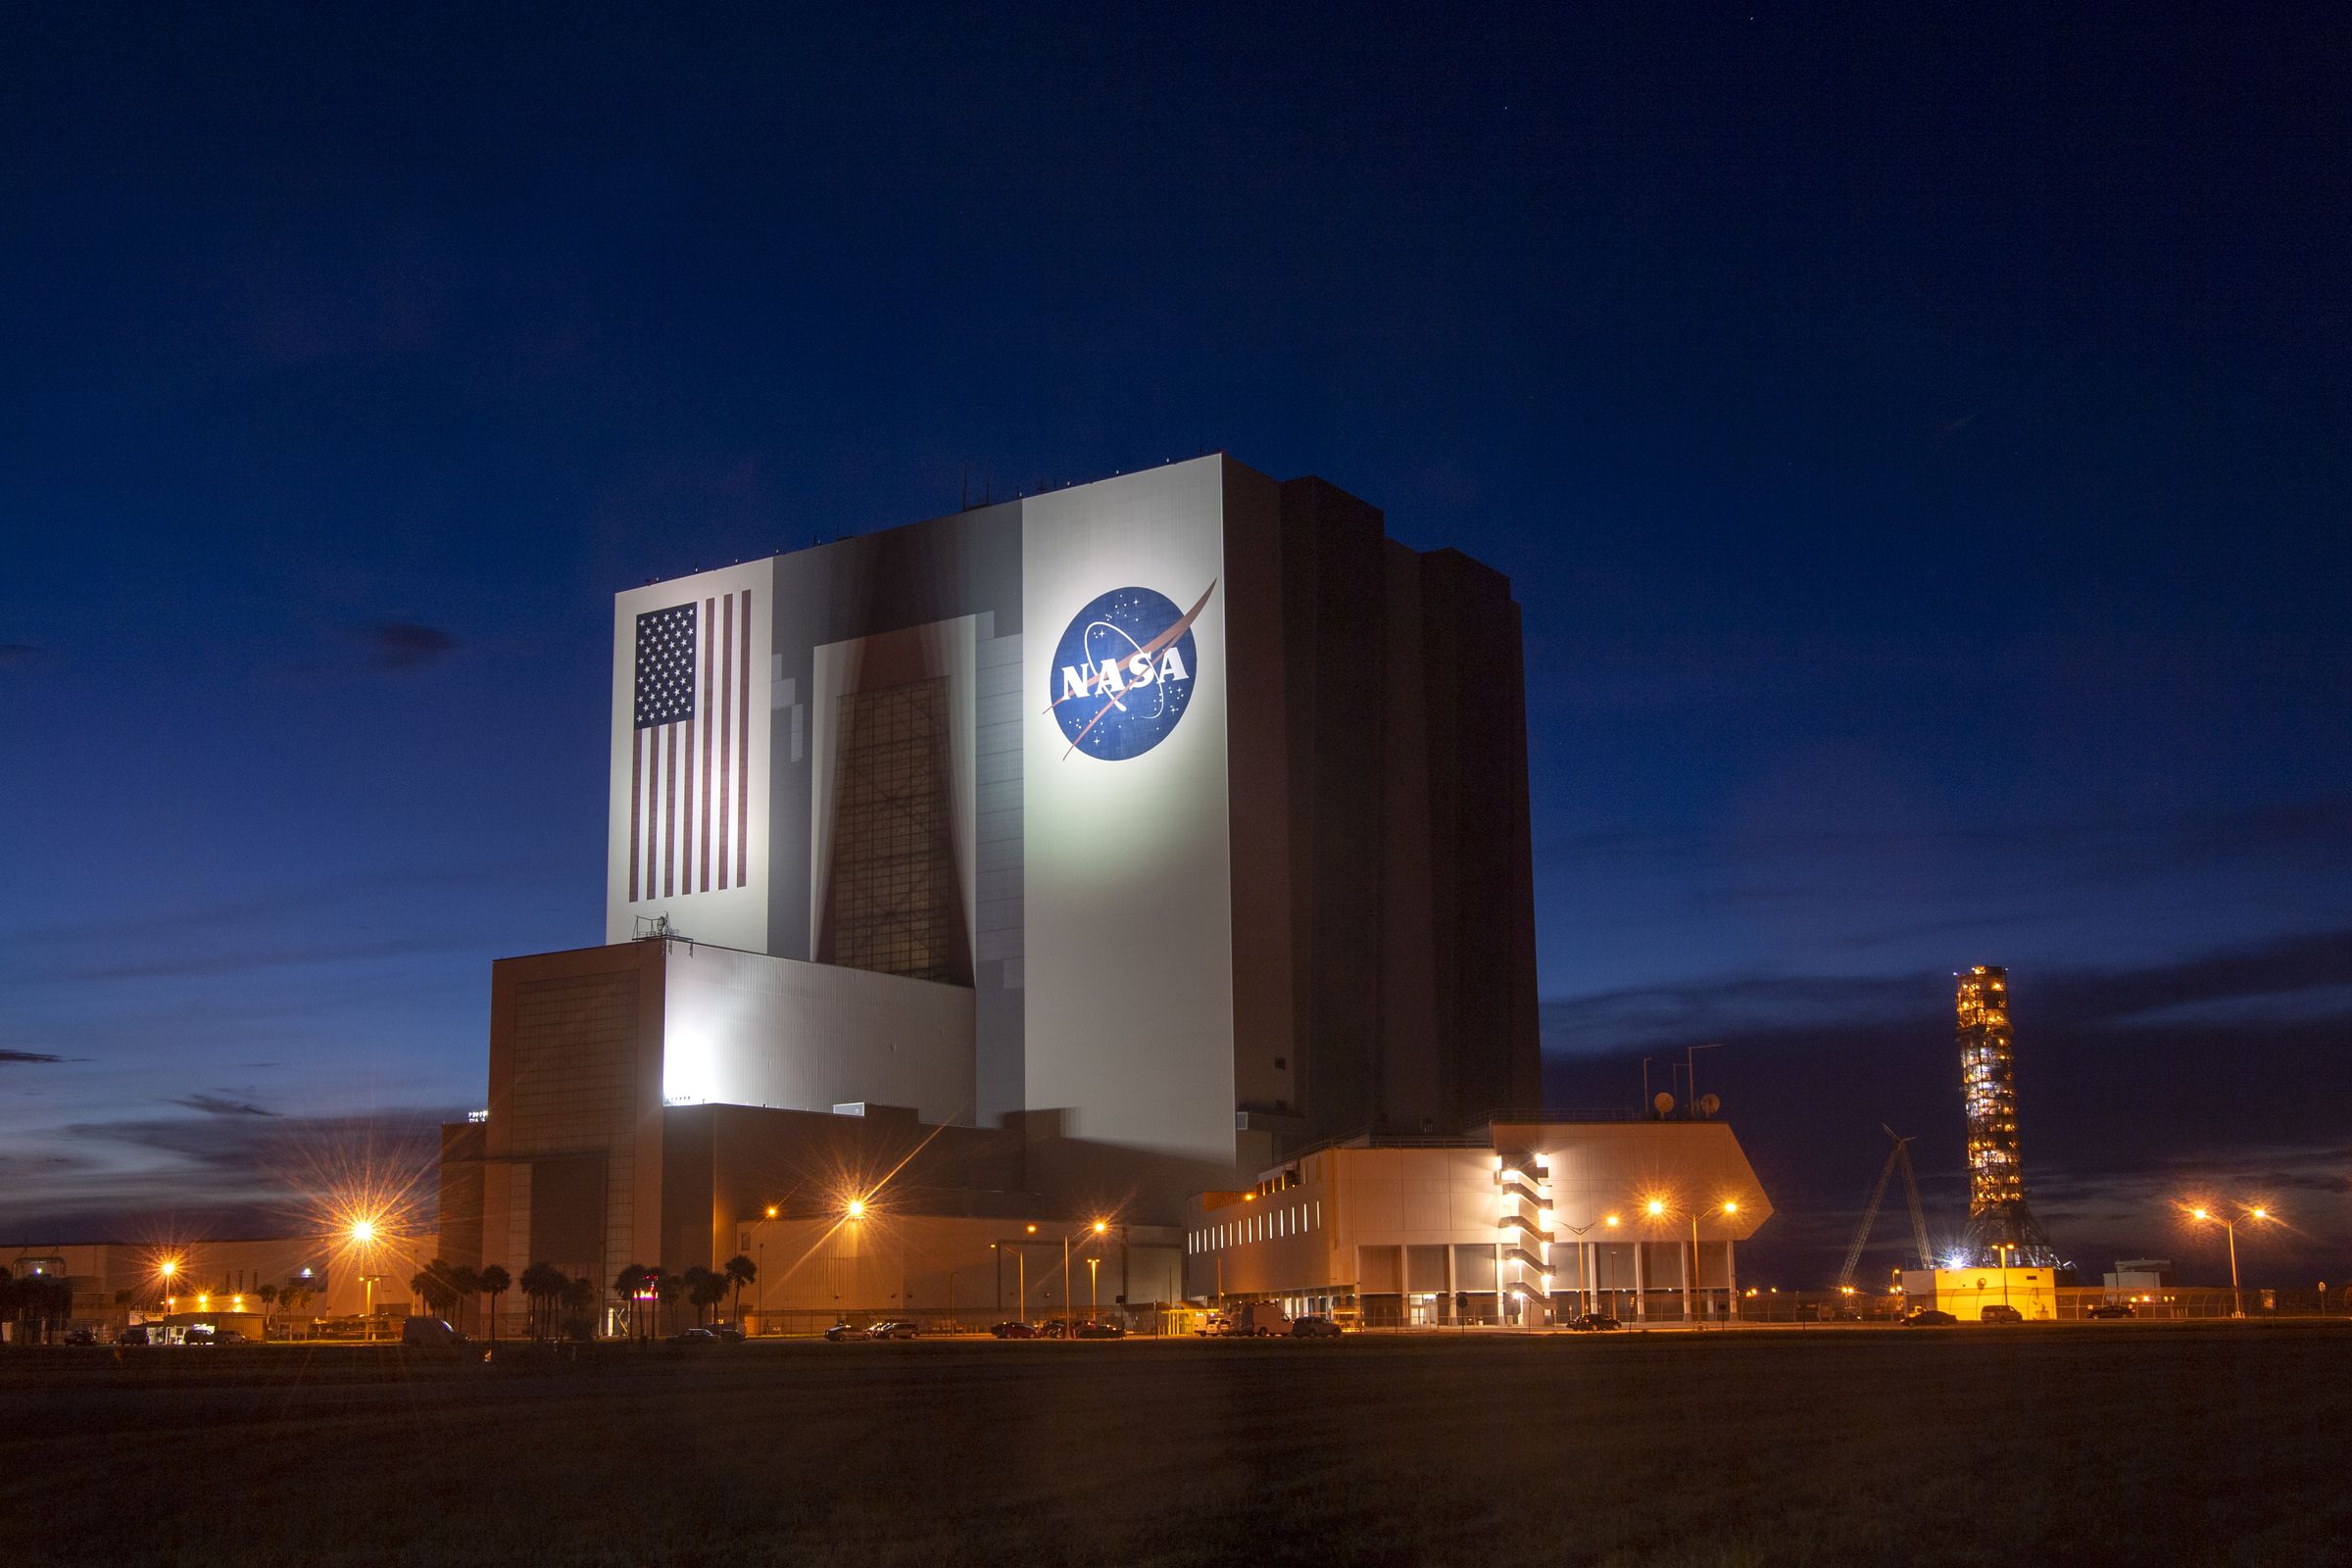 NASA VAB. Vehichle assembly building